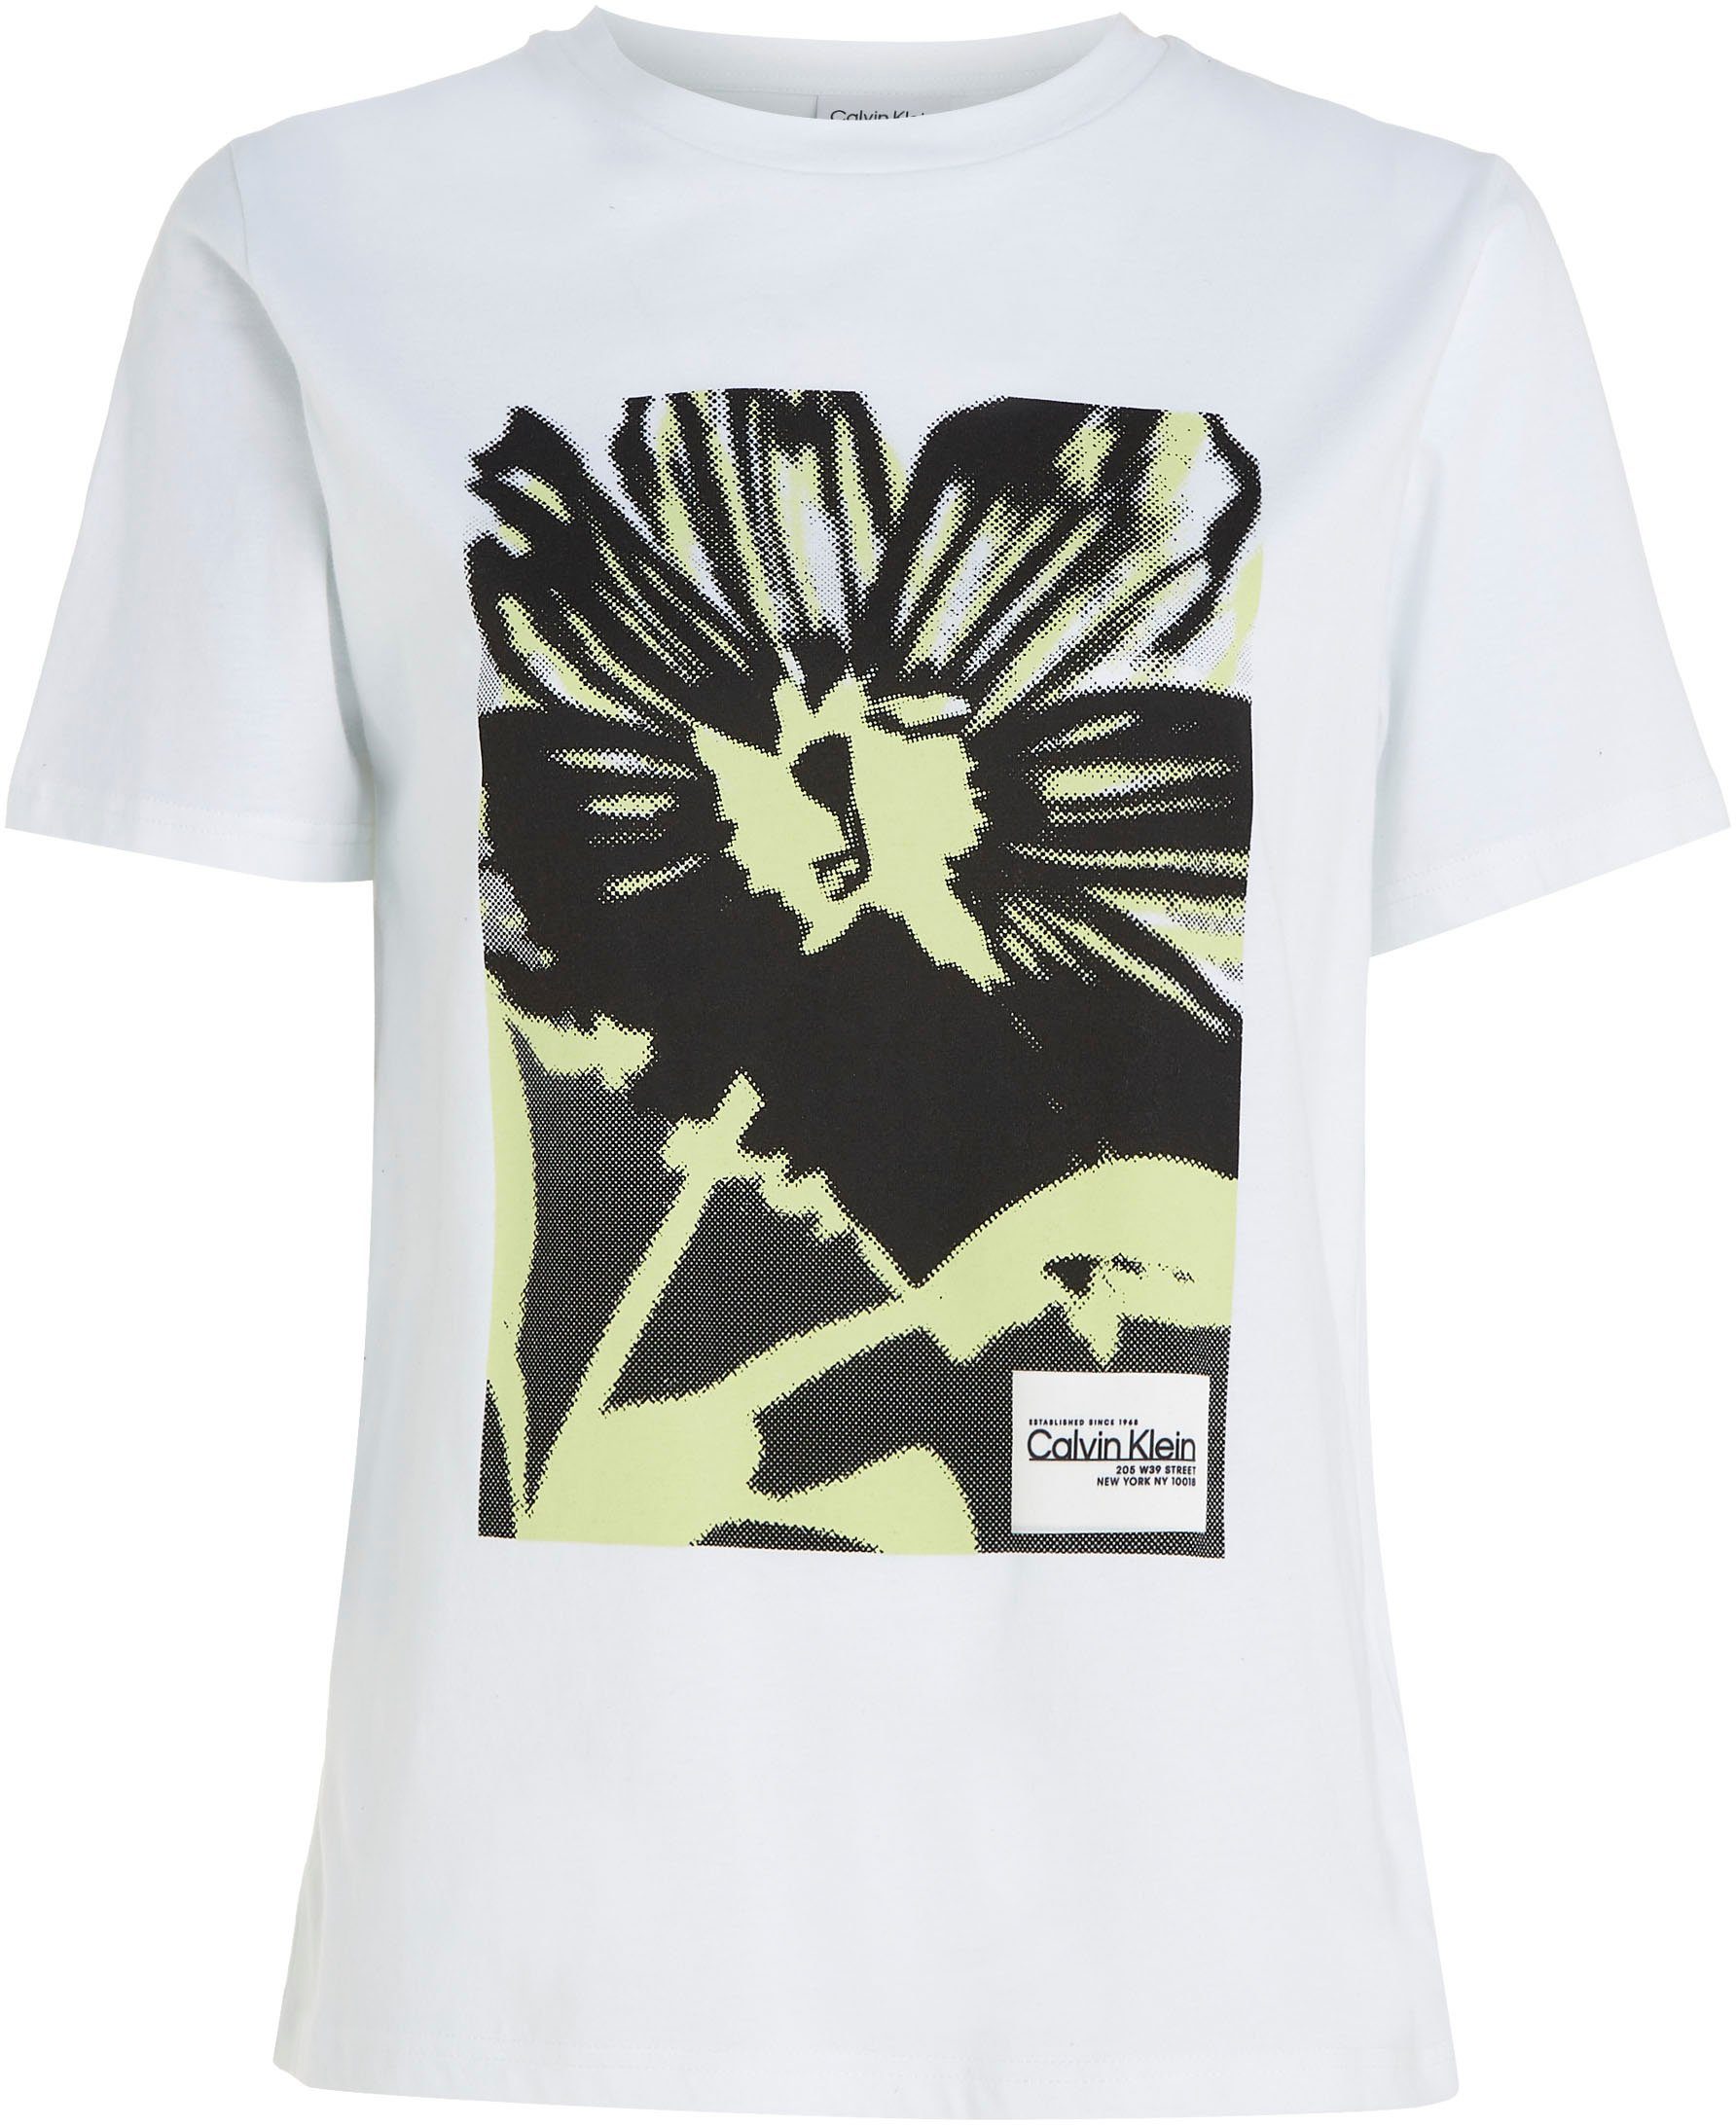 Klein T-Shirt Calvin Floral-Printmuster mit